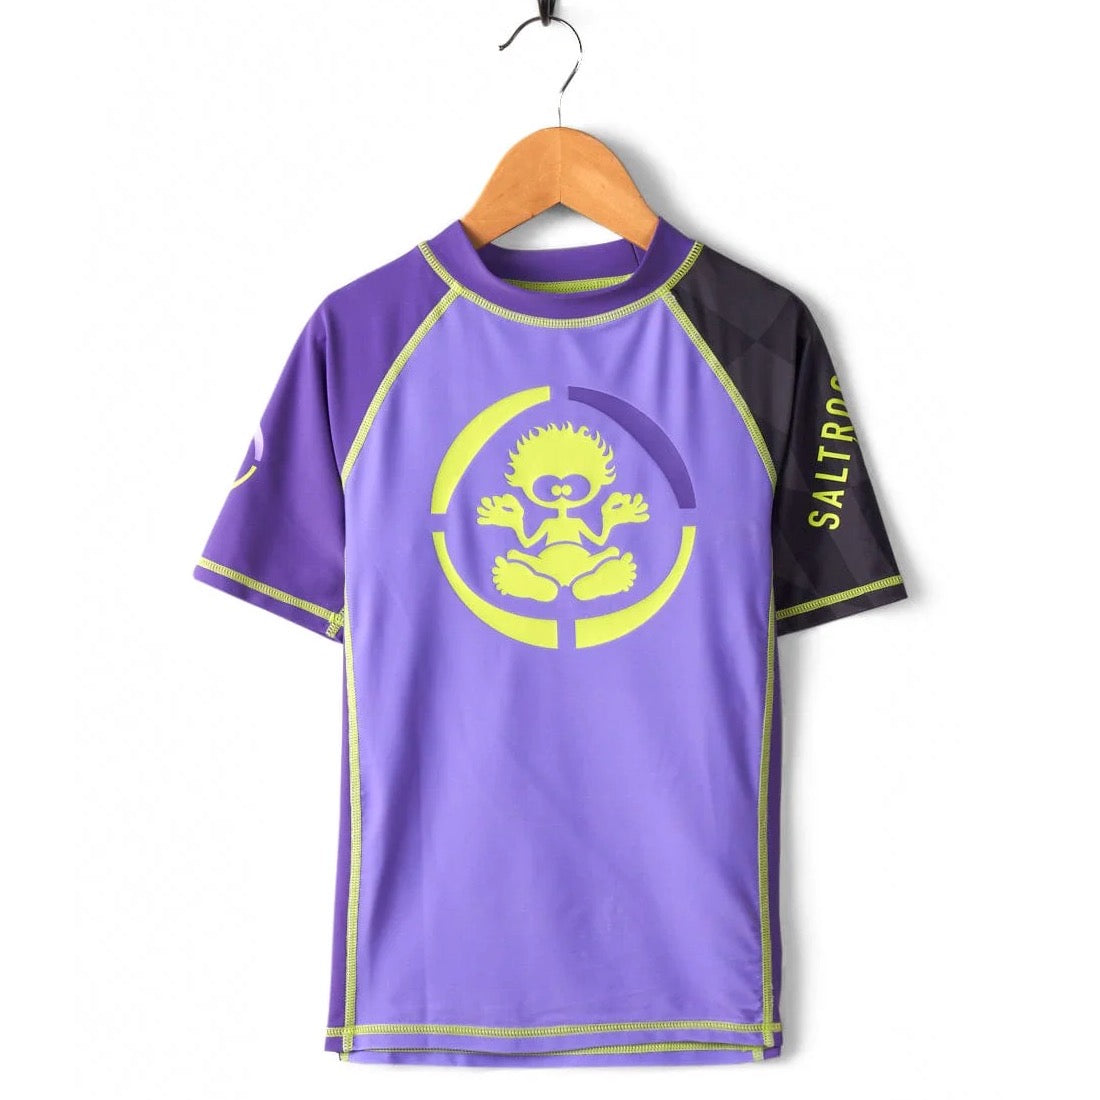 Saltrock Kids Warp Icon Rash Vest Clothing 7/8YRS / Purple,9/10YRS / Purple,11/12YRS / Purple,13YRS / Purple